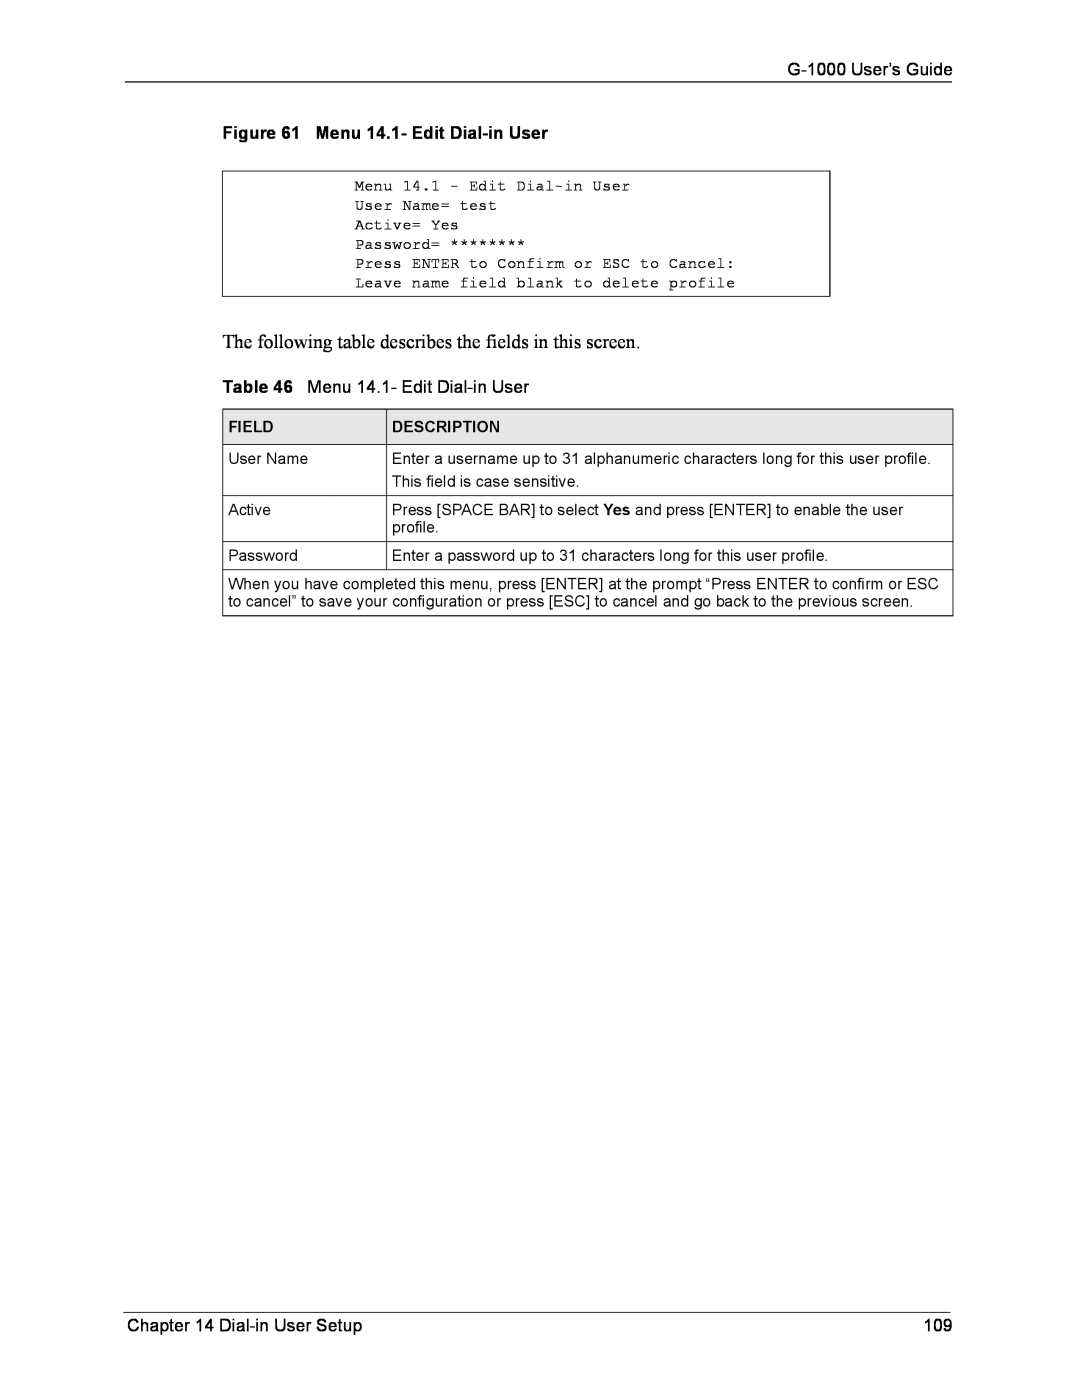 ZyXEL Communications manual G-1000 User’s Guide, Menu 14.1- Edit Dial-in User, Dial-in User Setup, Field, Description 